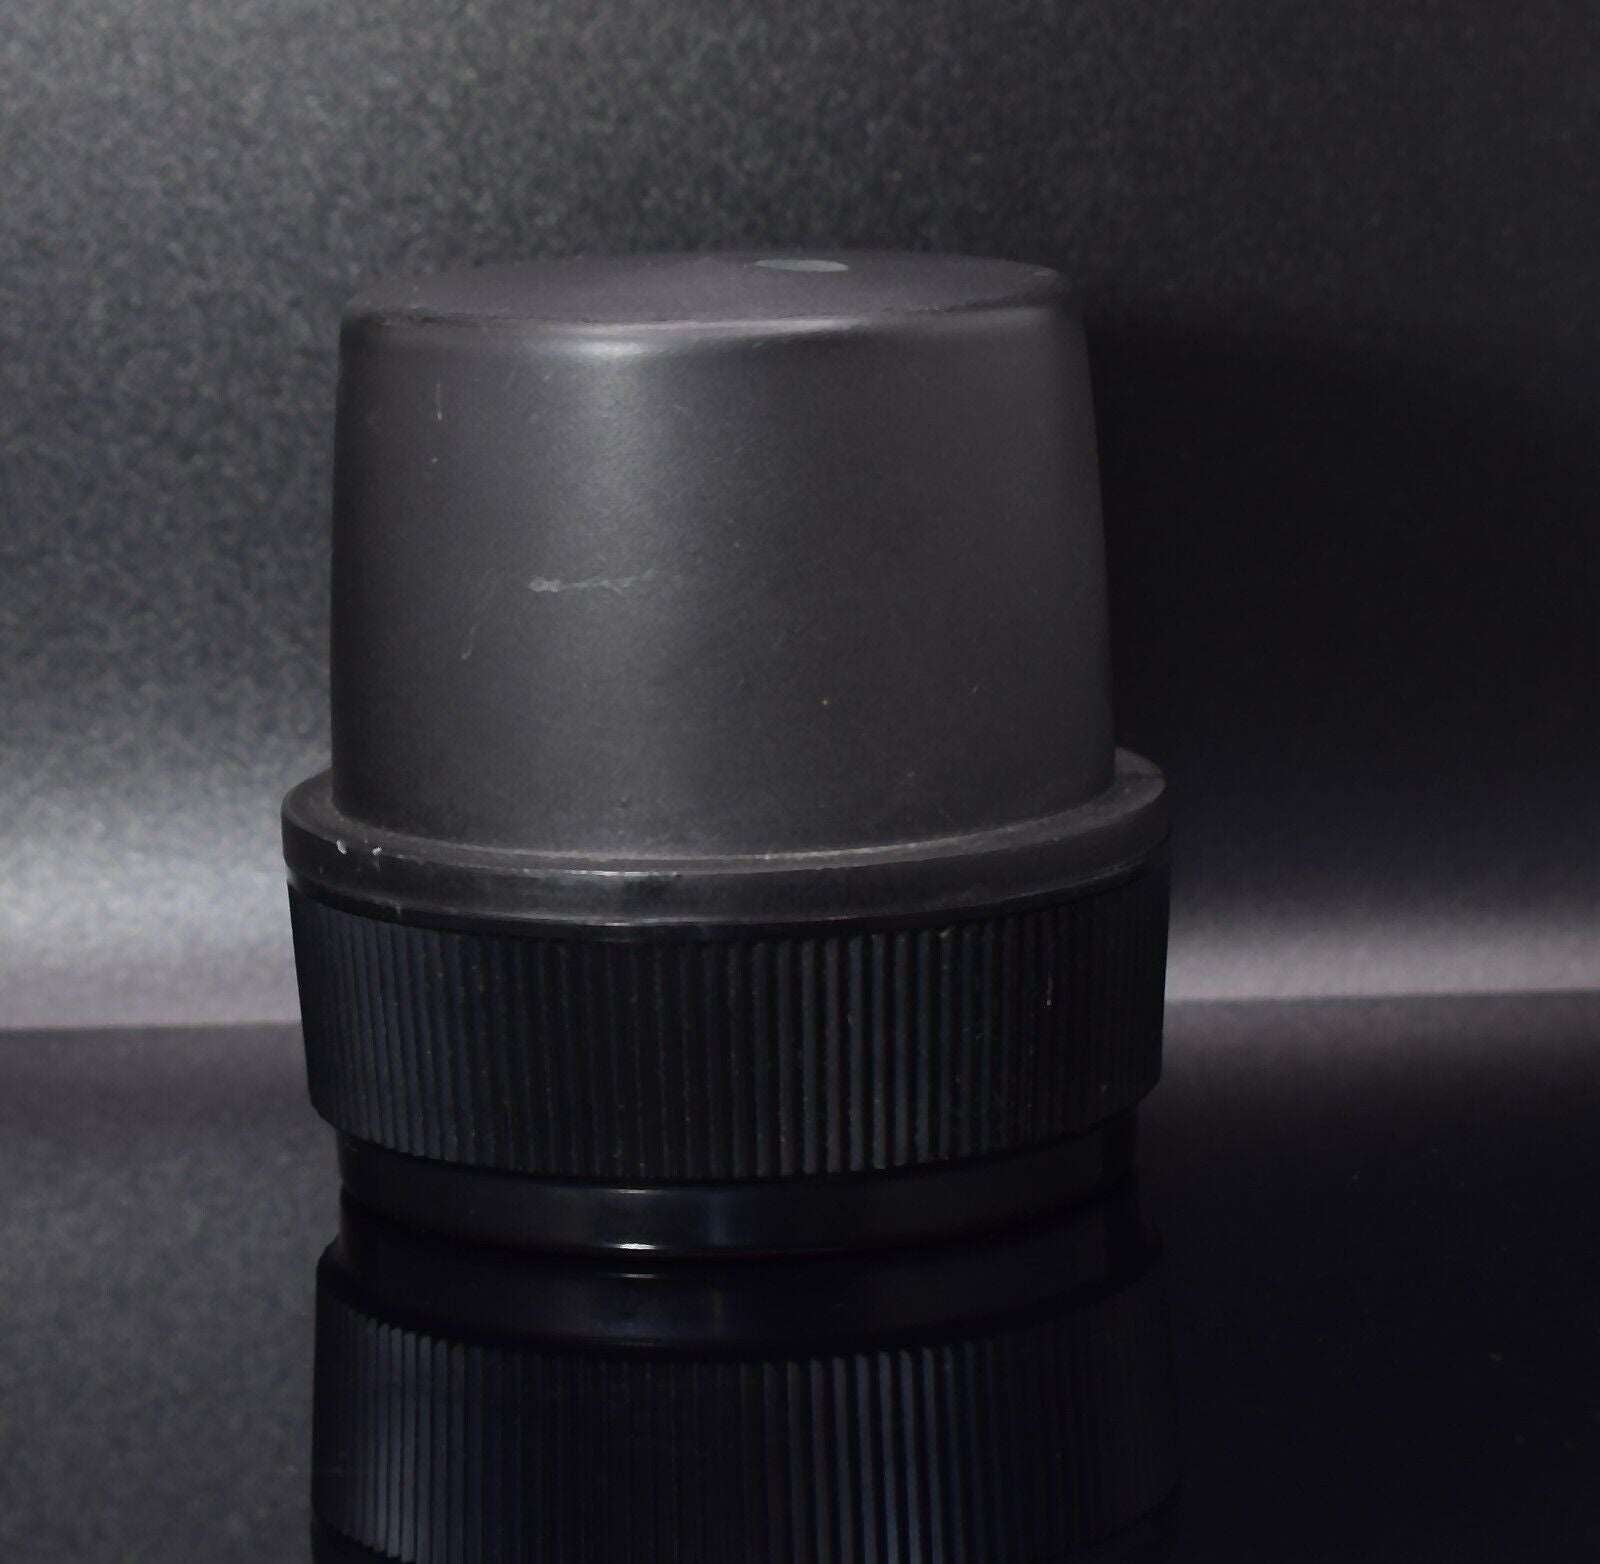 Fujimoto Enlarger or Macro E-Lucky f2.8 50mm Lens Black in Original Bu –  duckling cameras